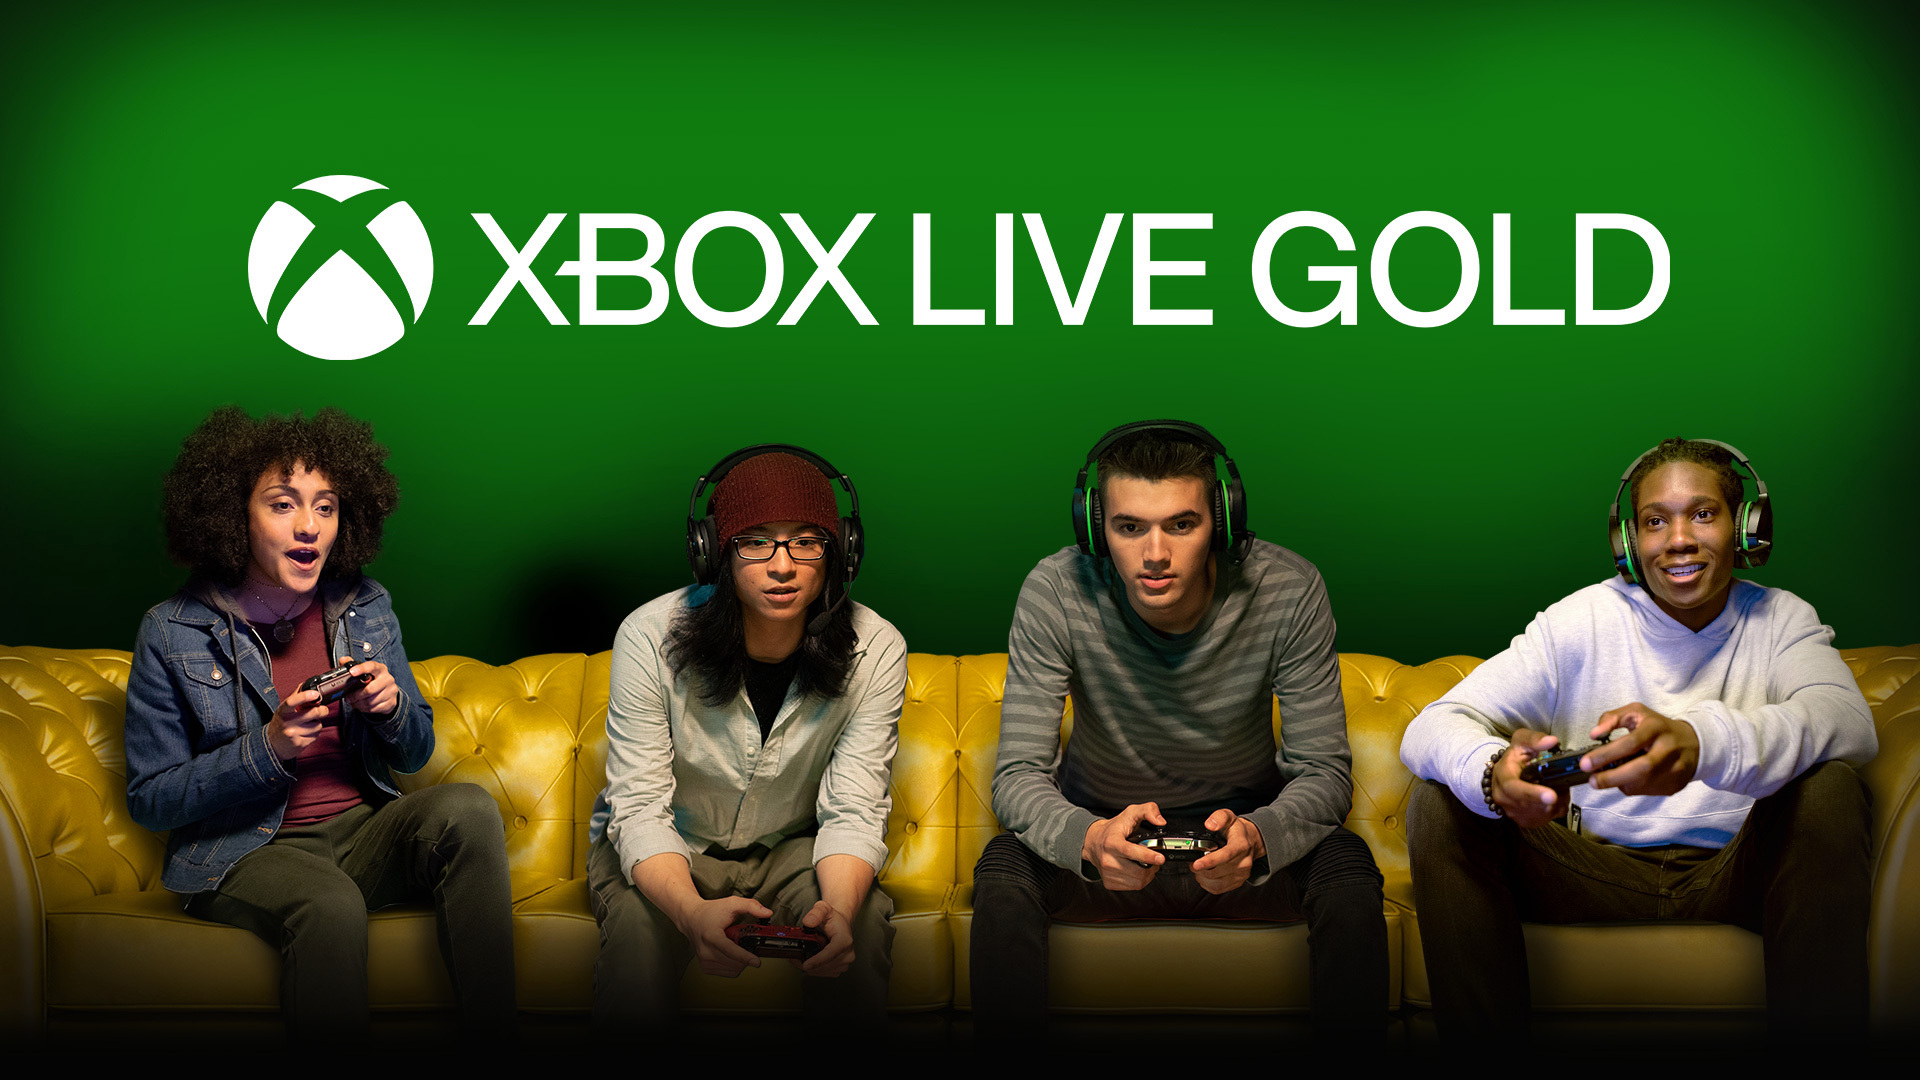 Отмена изменения цен на подписку Xbox Live Gold и снятие её необходимости  для Free-to-play игр [ОБНОВЛЕНО] - Xbox Wire на русском